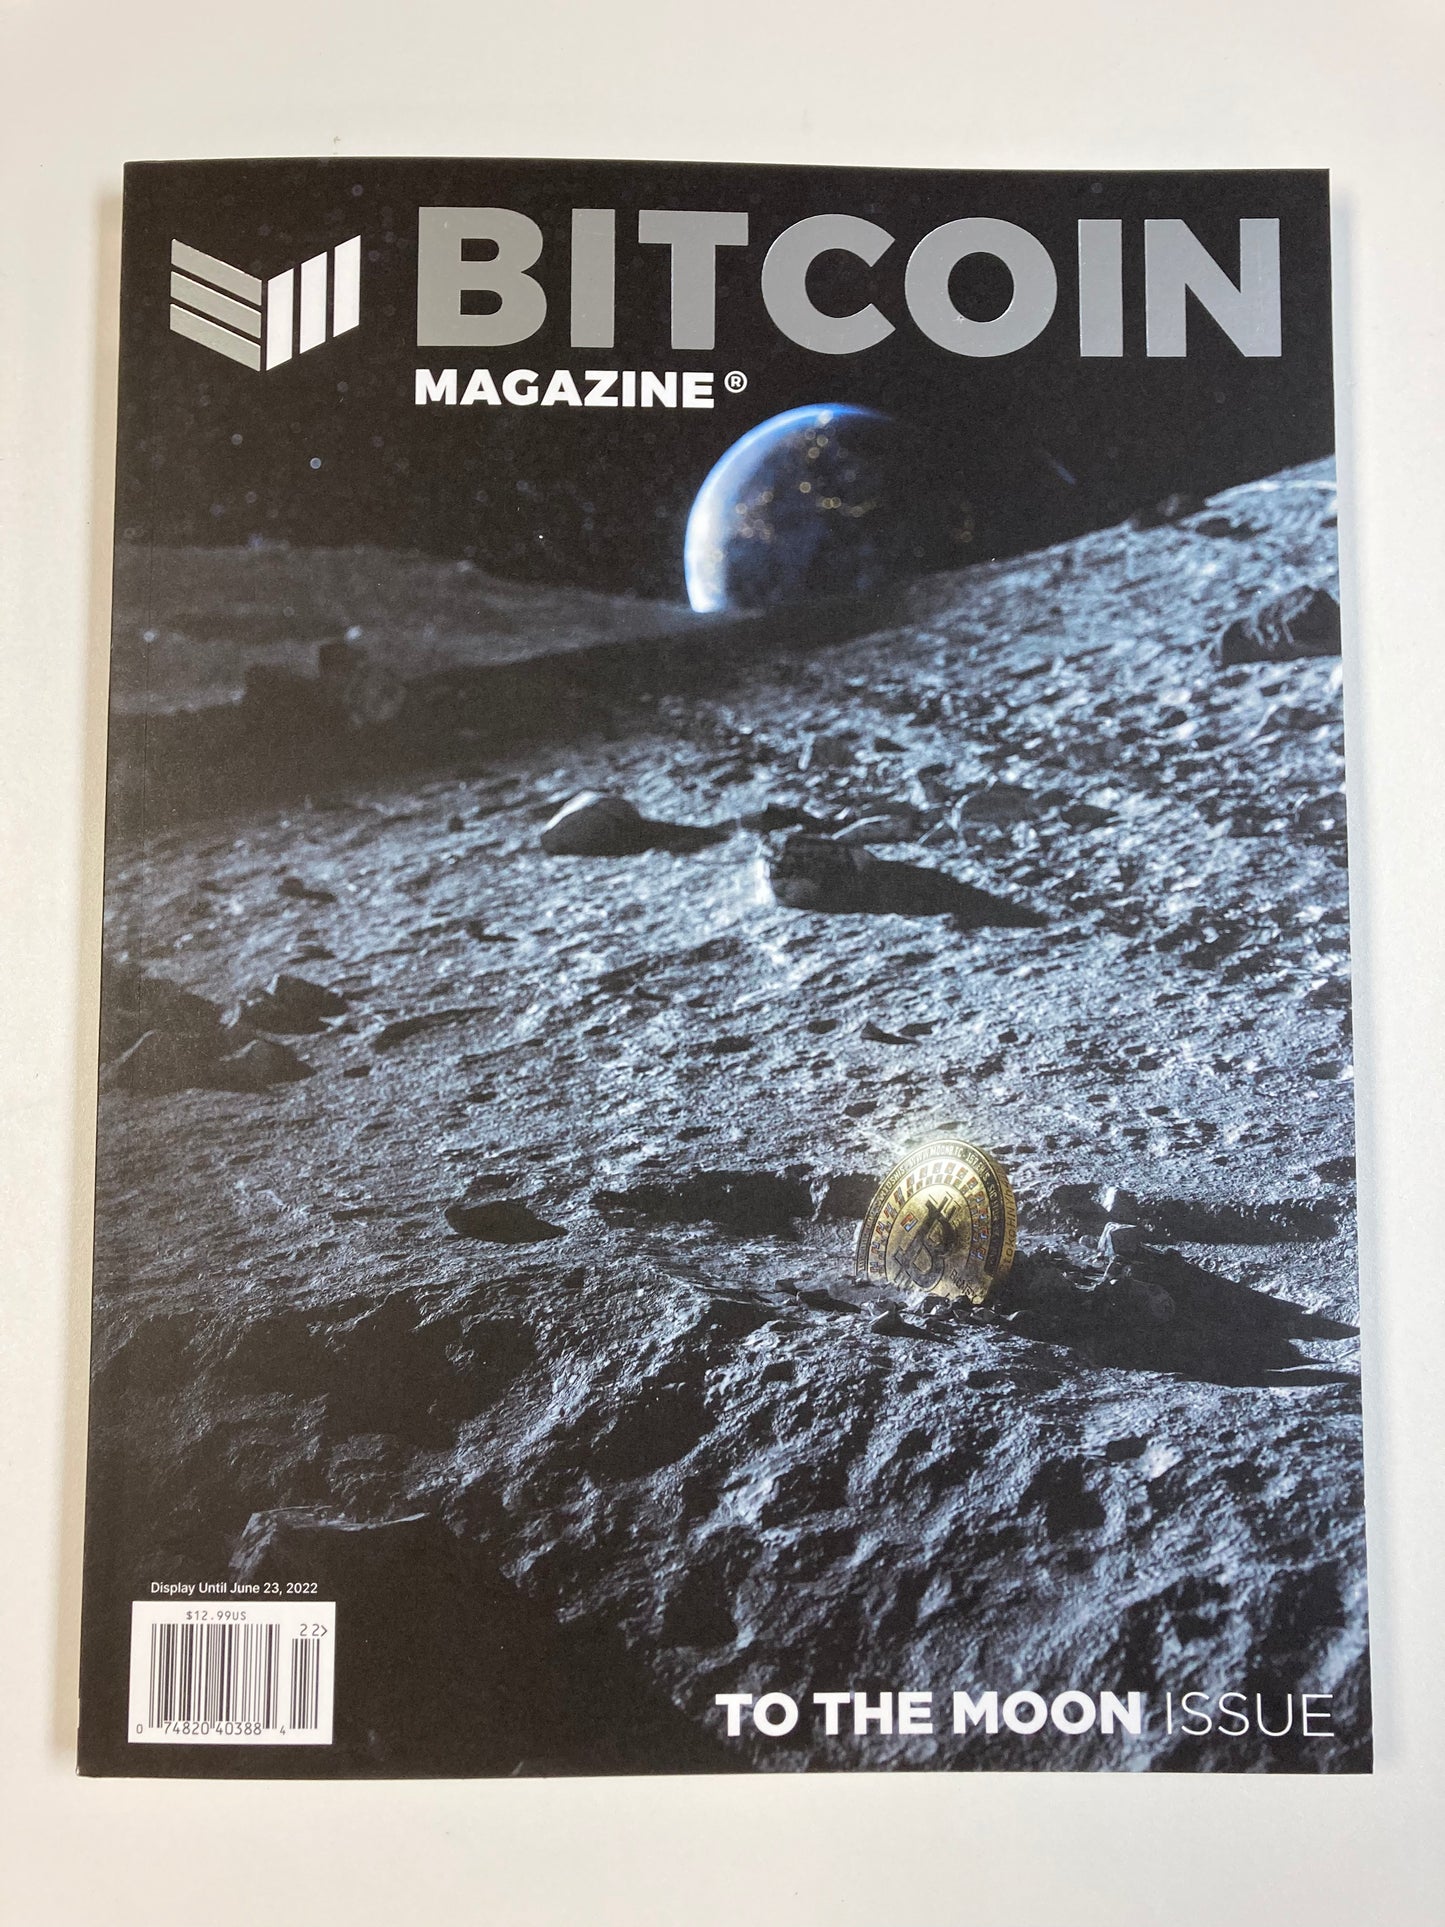 Bitcoin Magazine - The Moon Issue